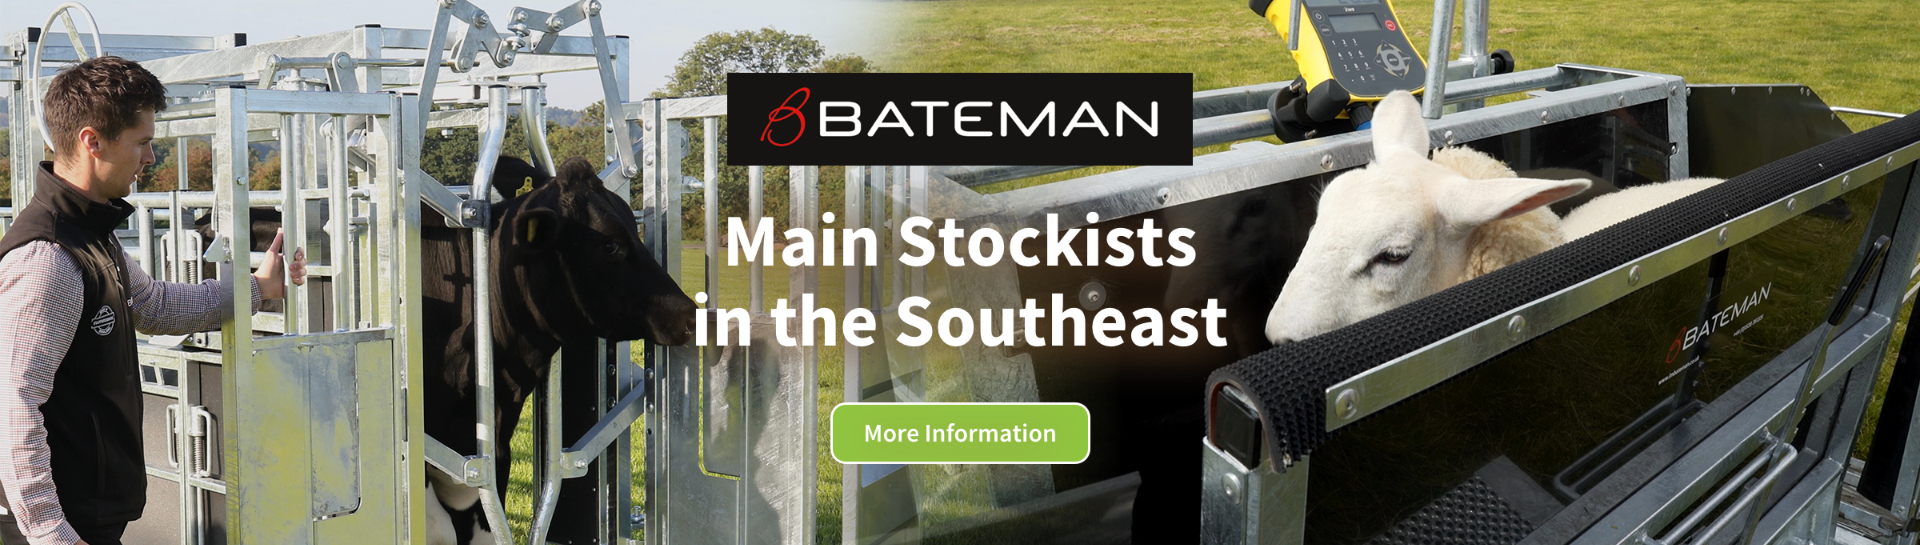 Bateman. Main stockists in the Southeast